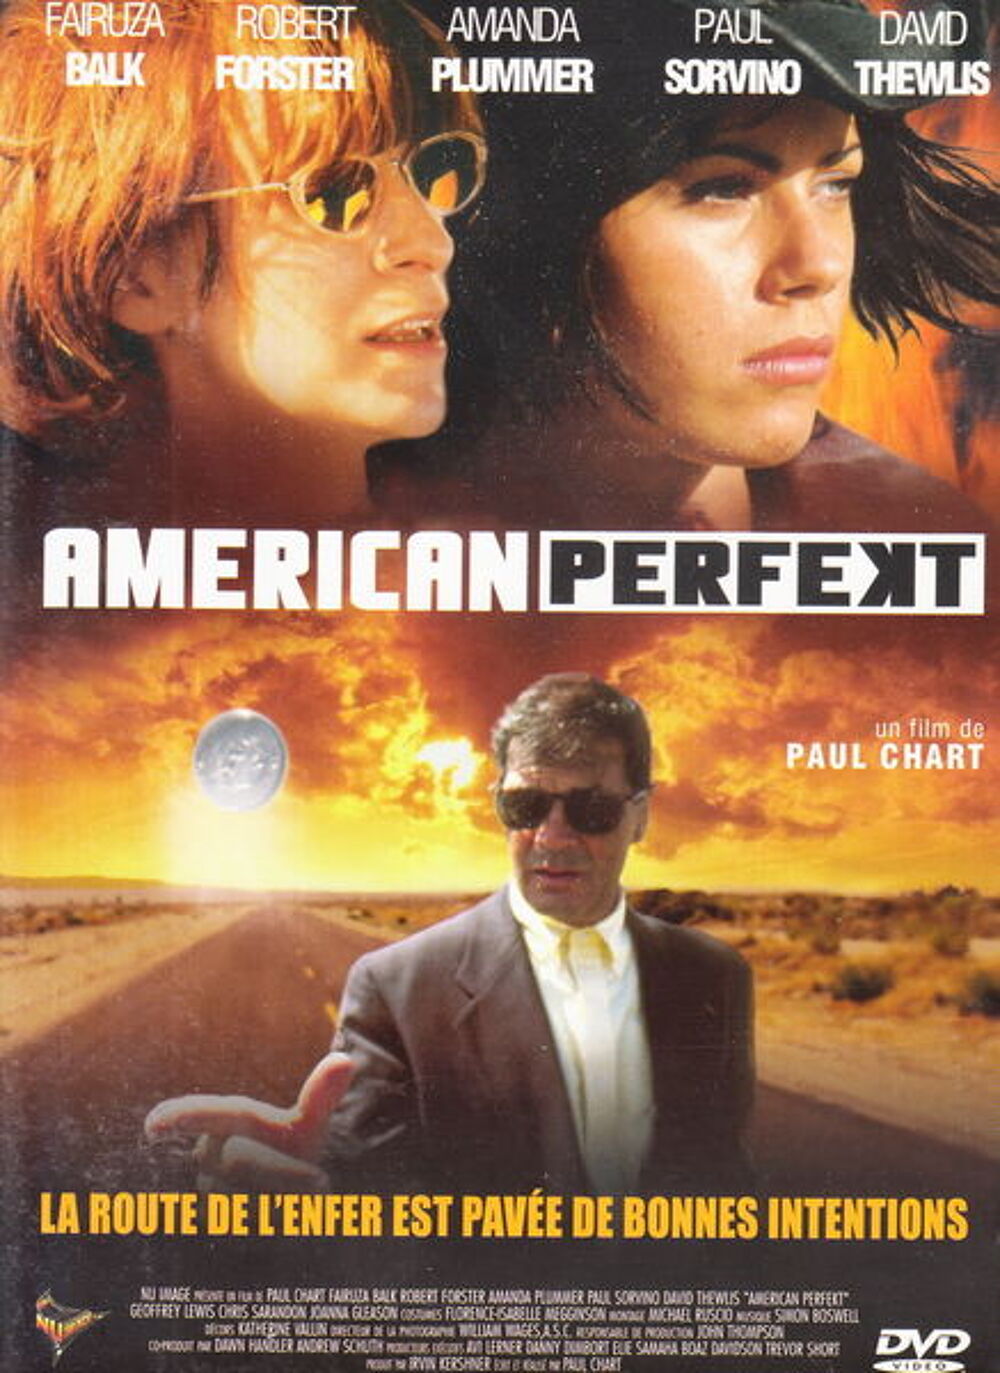 DVD American perfekt
DVD et blu-ray